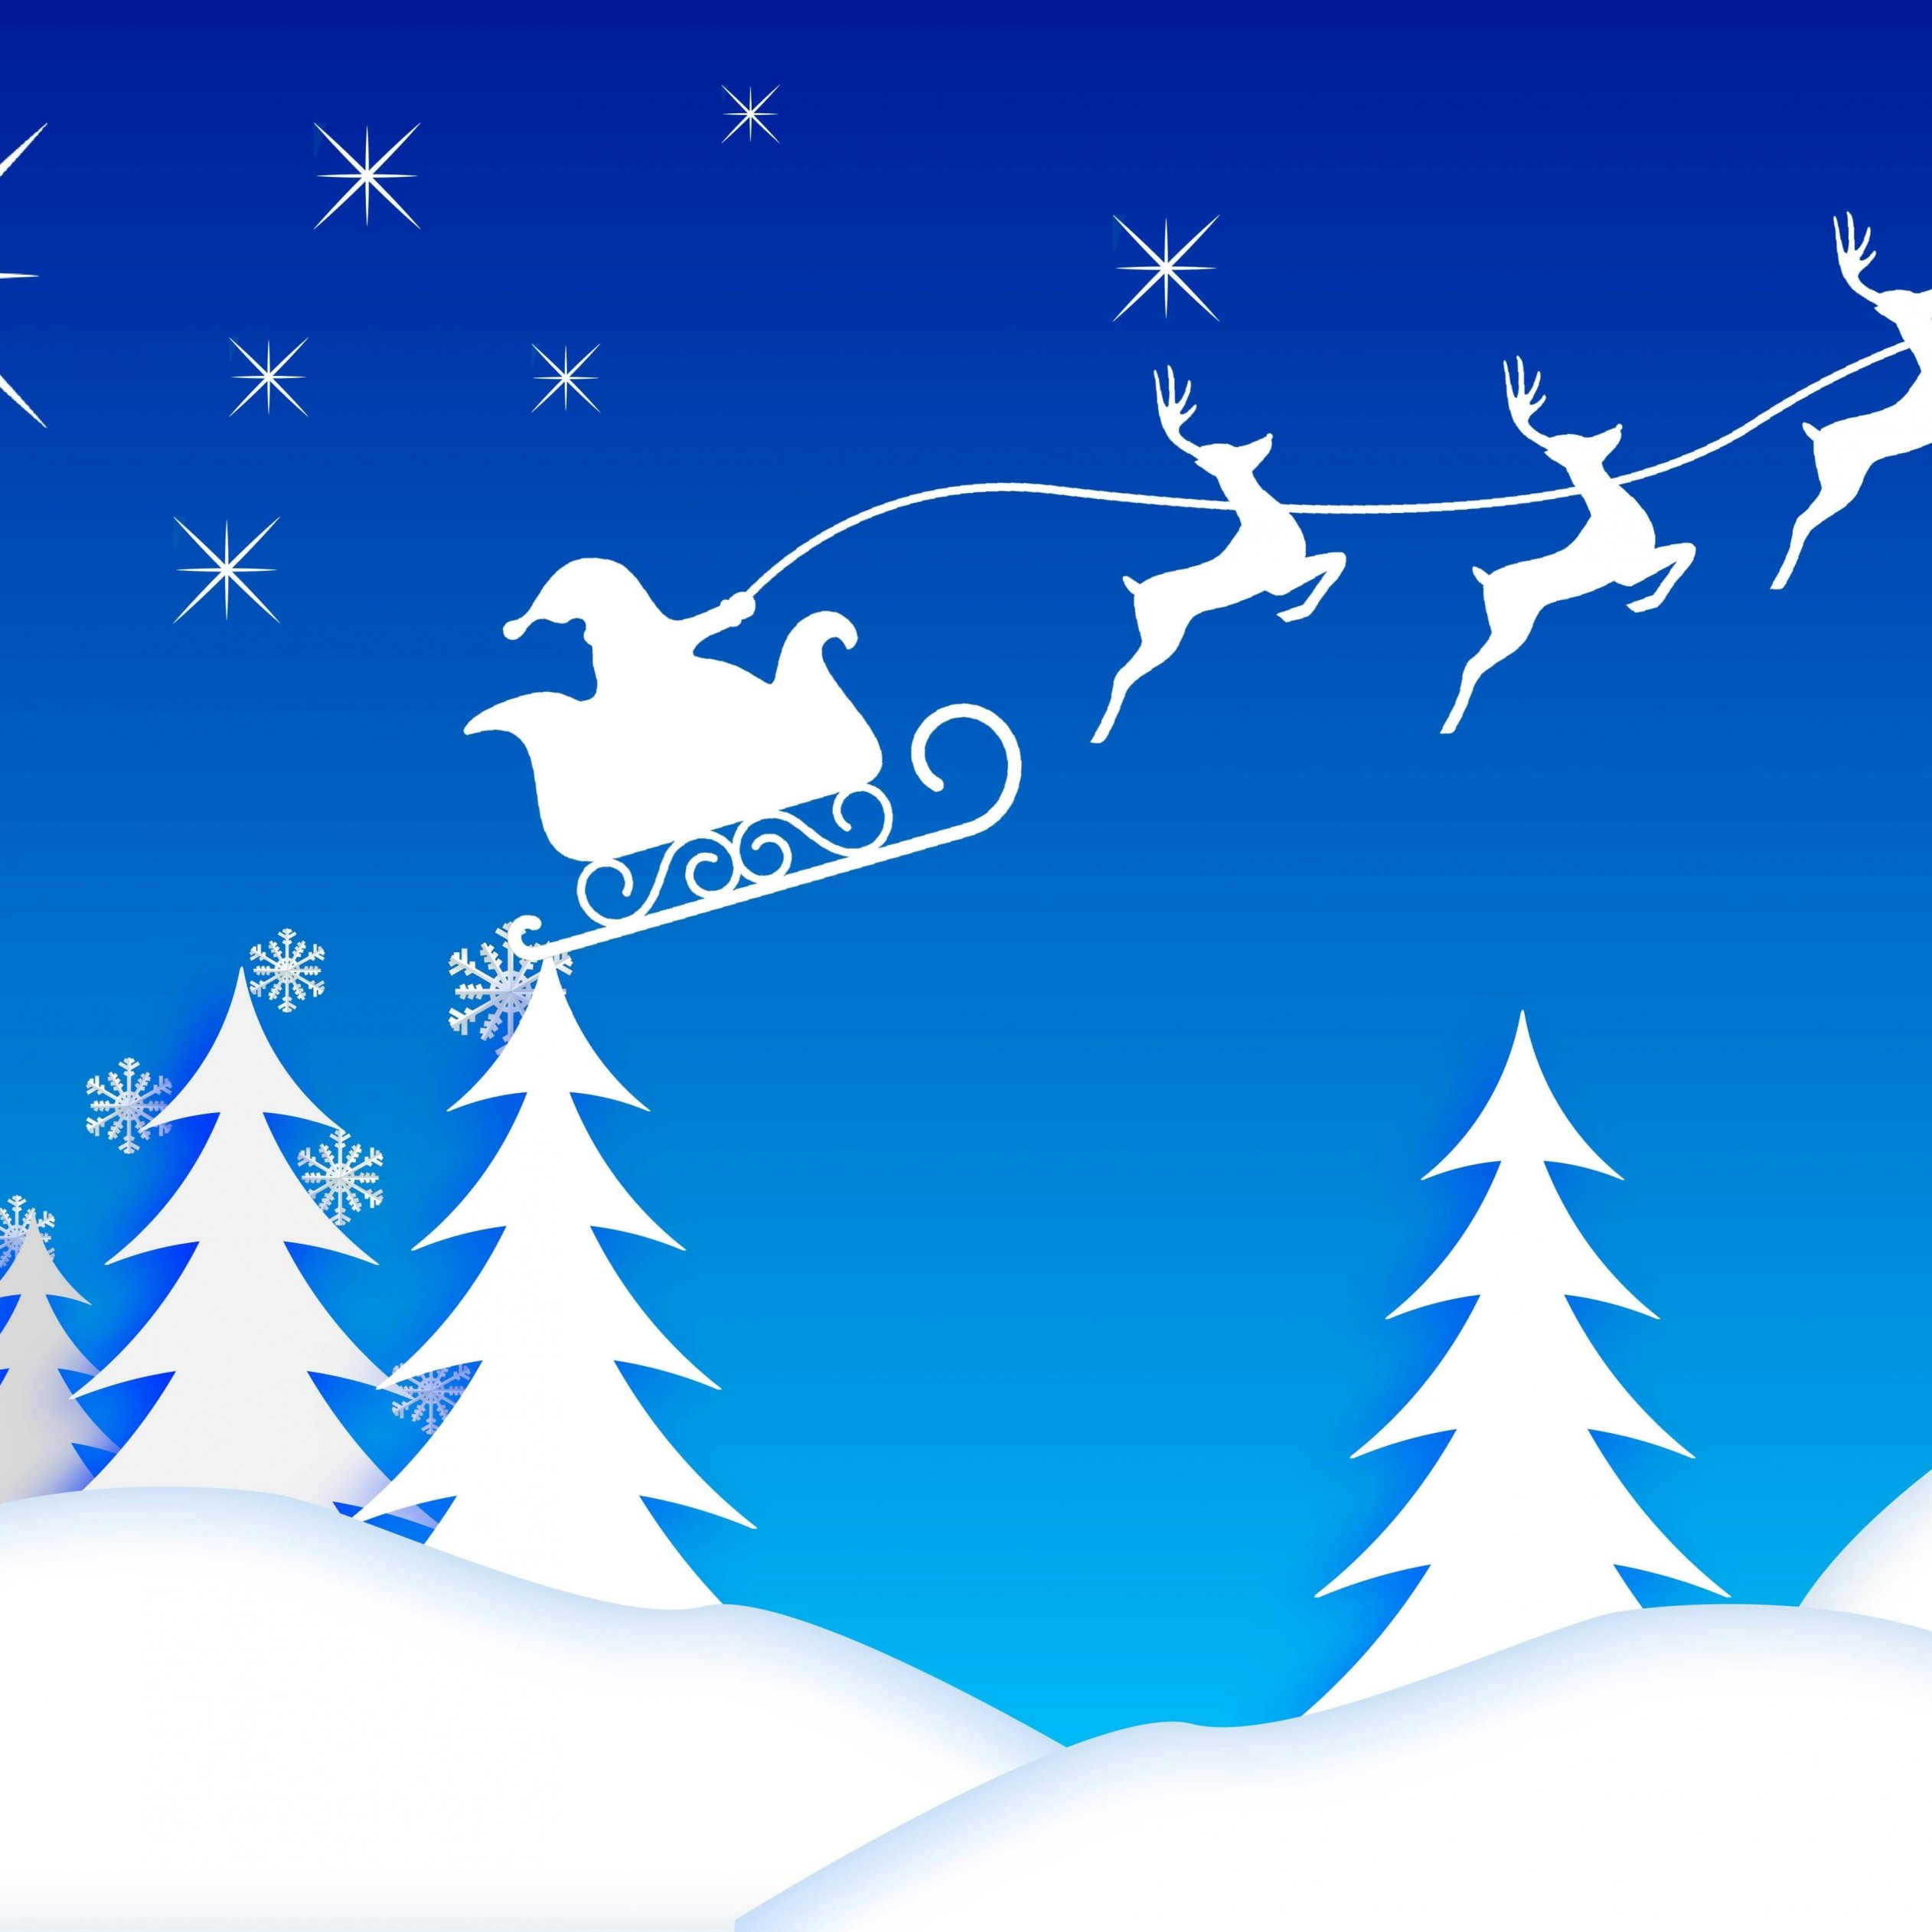 Santa’s Sleigh Illustration Wallpaper for Apple iPad Air